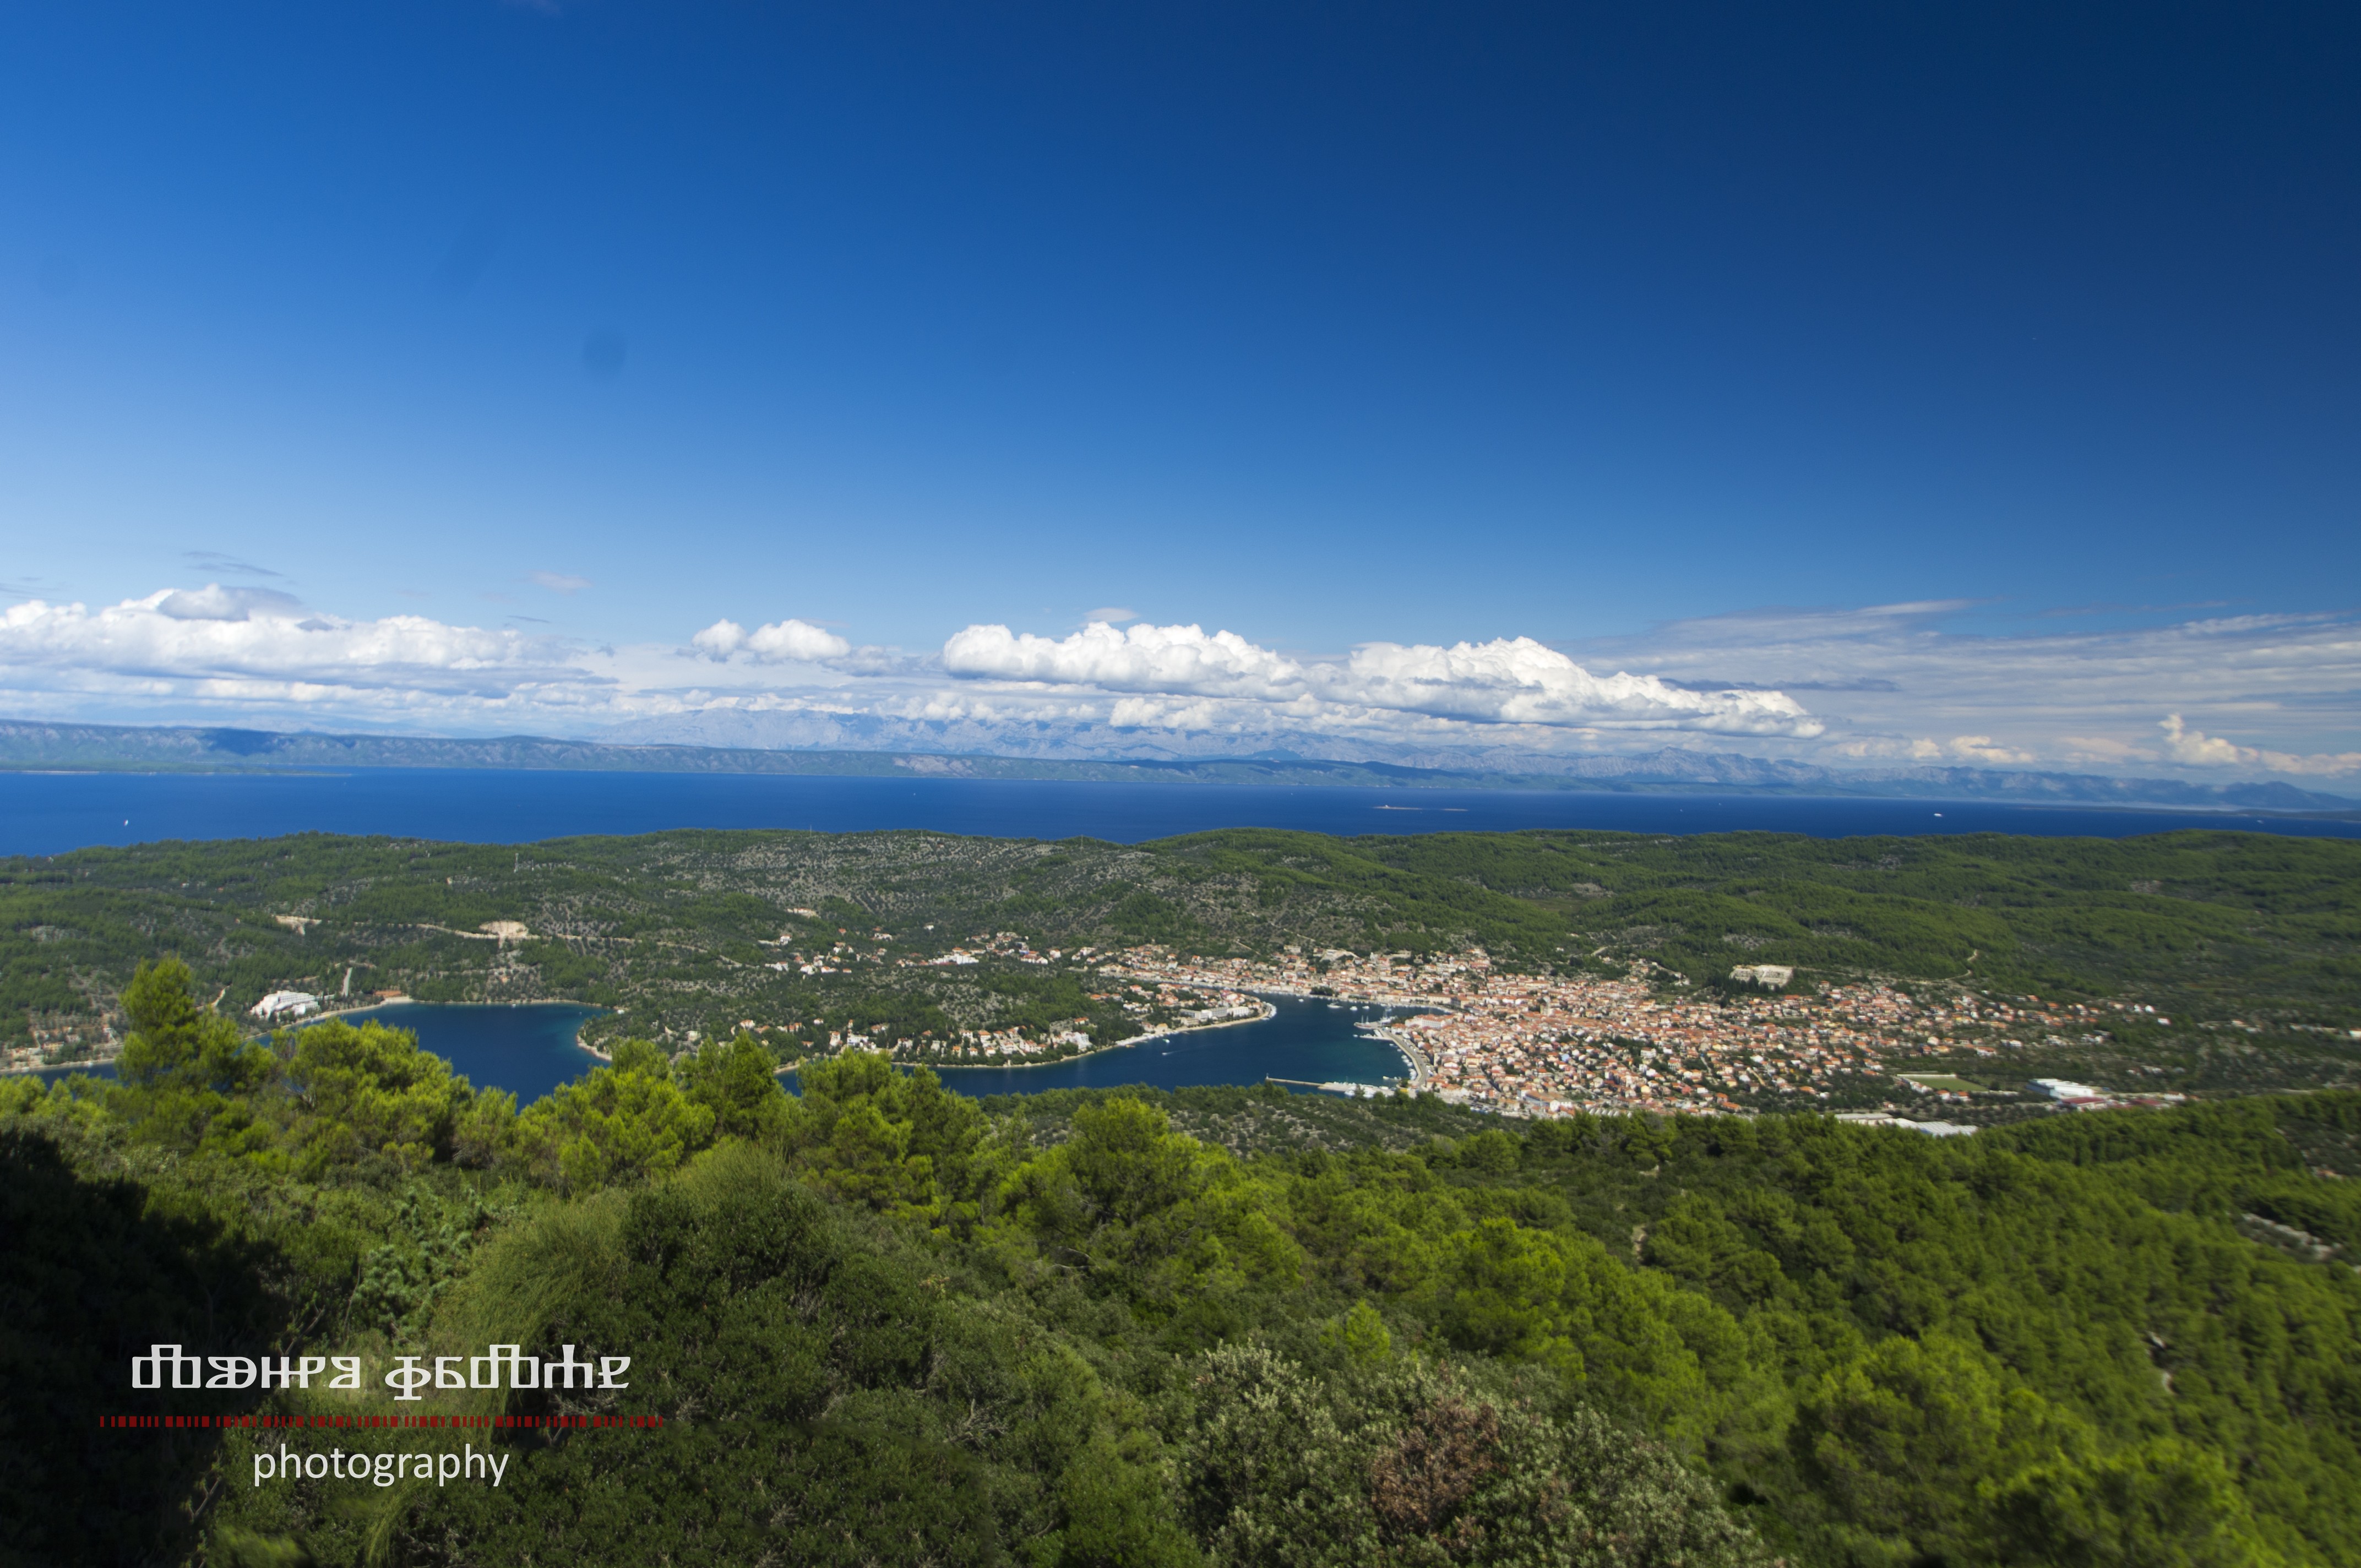 General 4288x2848 landscape sky aerial view clouds Croatian Croatia Glagolitic watermarked